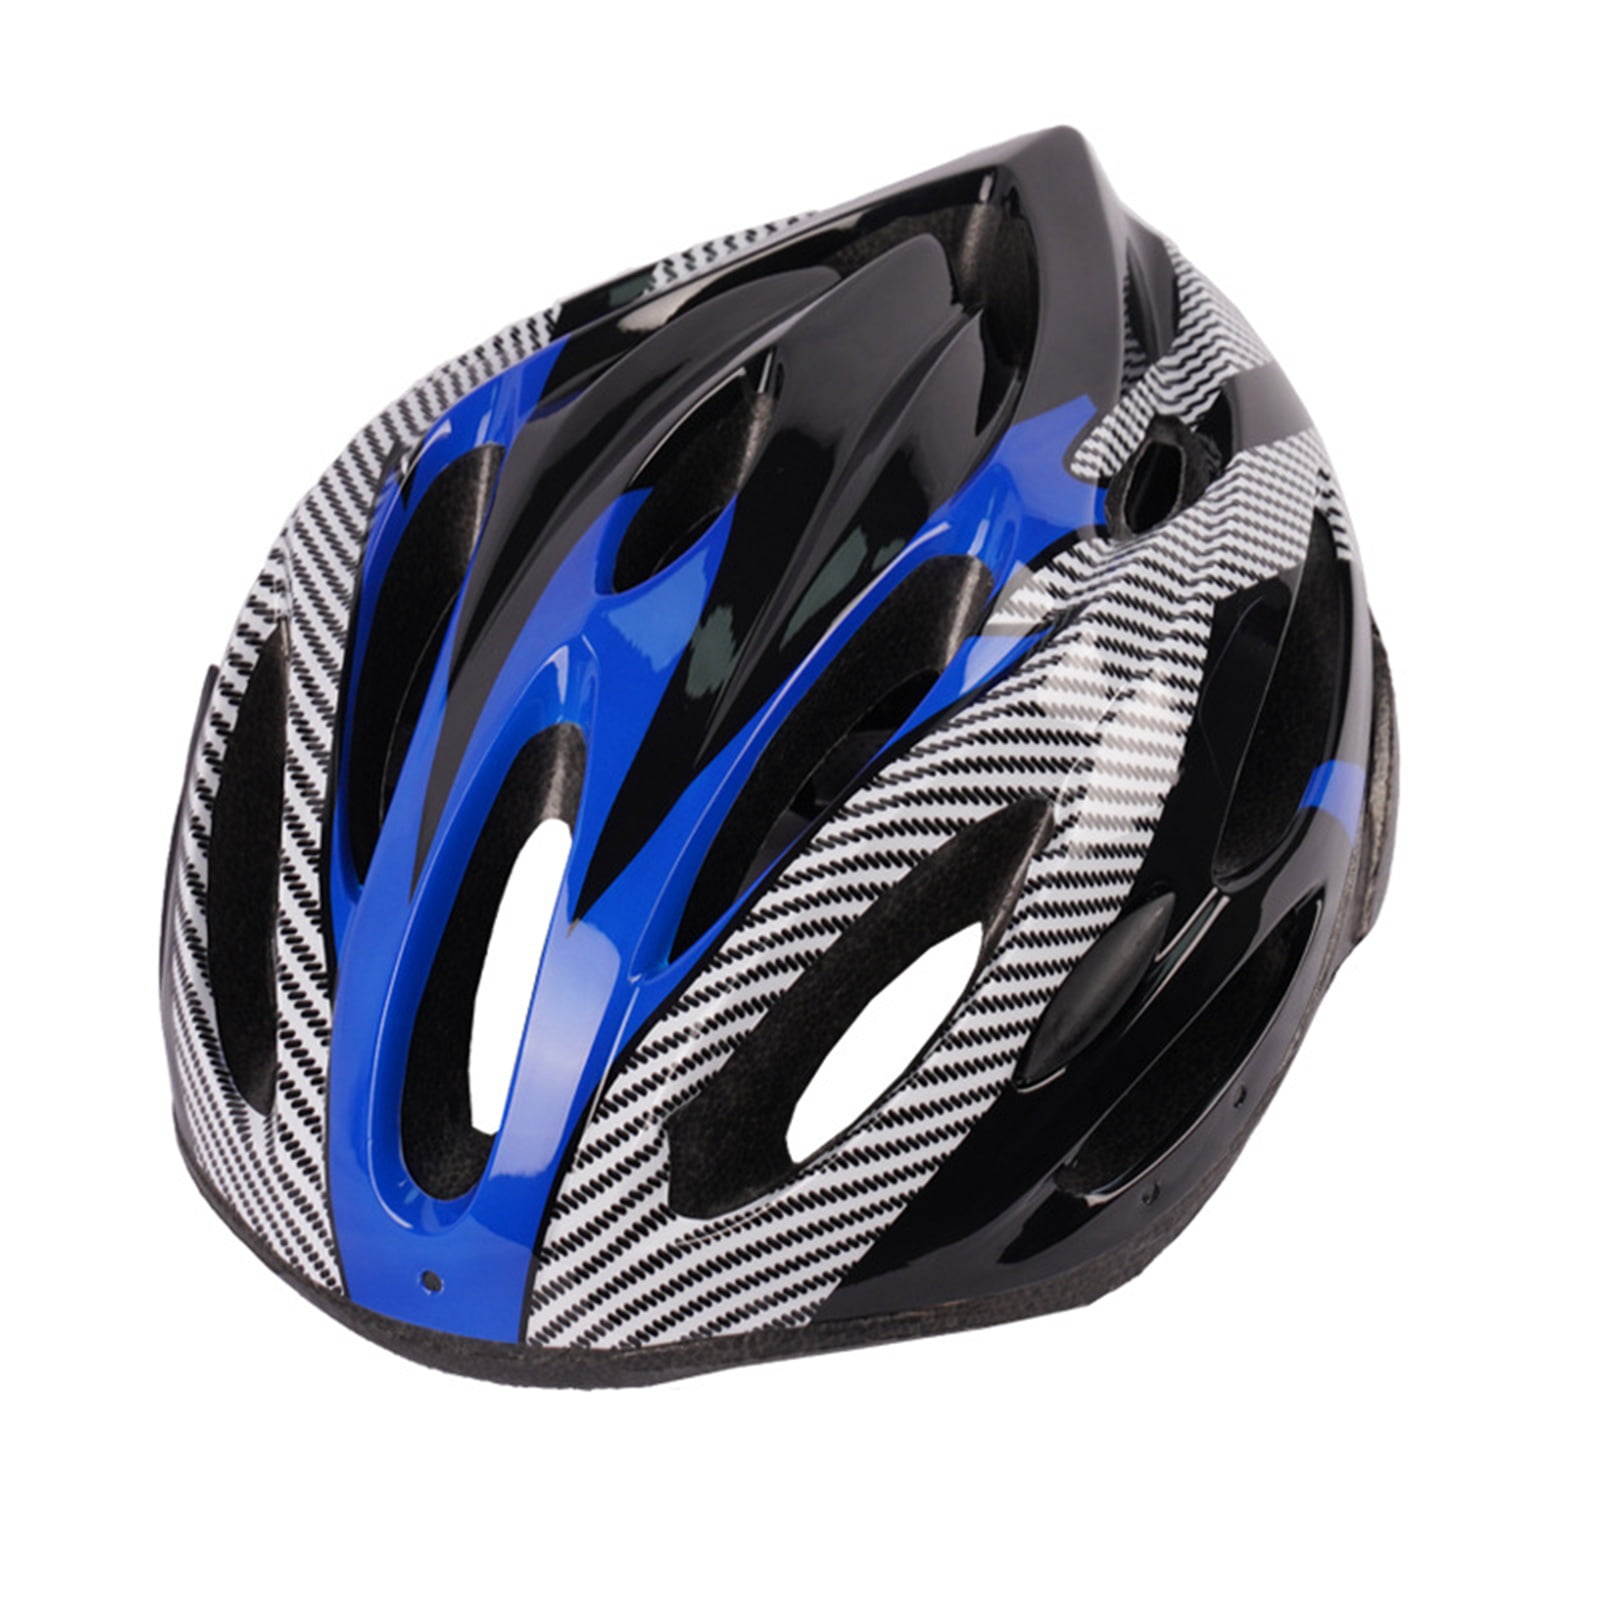 Unisex MTB Bicycle Cycling Helmet Adjustable Bike Adult Outdoor Safety Helmet 